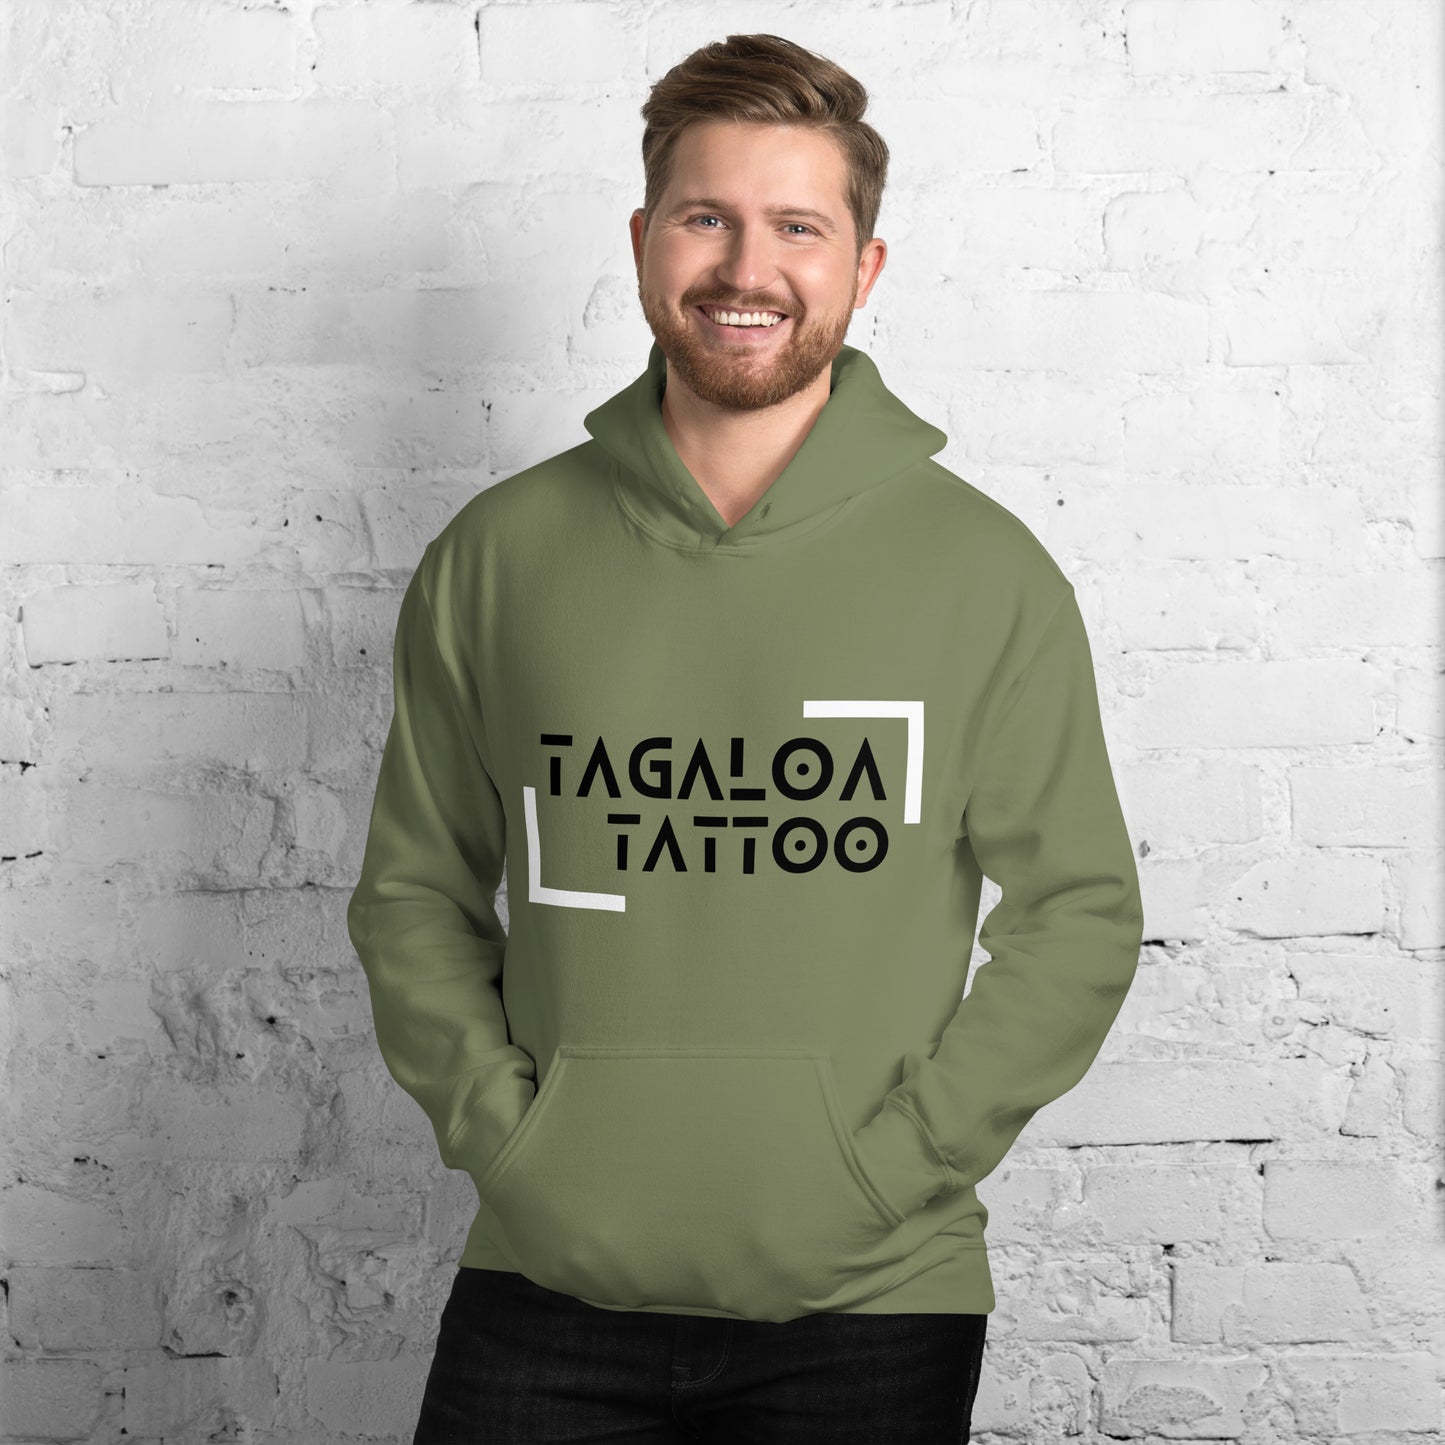 Tagaloa Tattoo Hoodie: Where Style Meets Passion